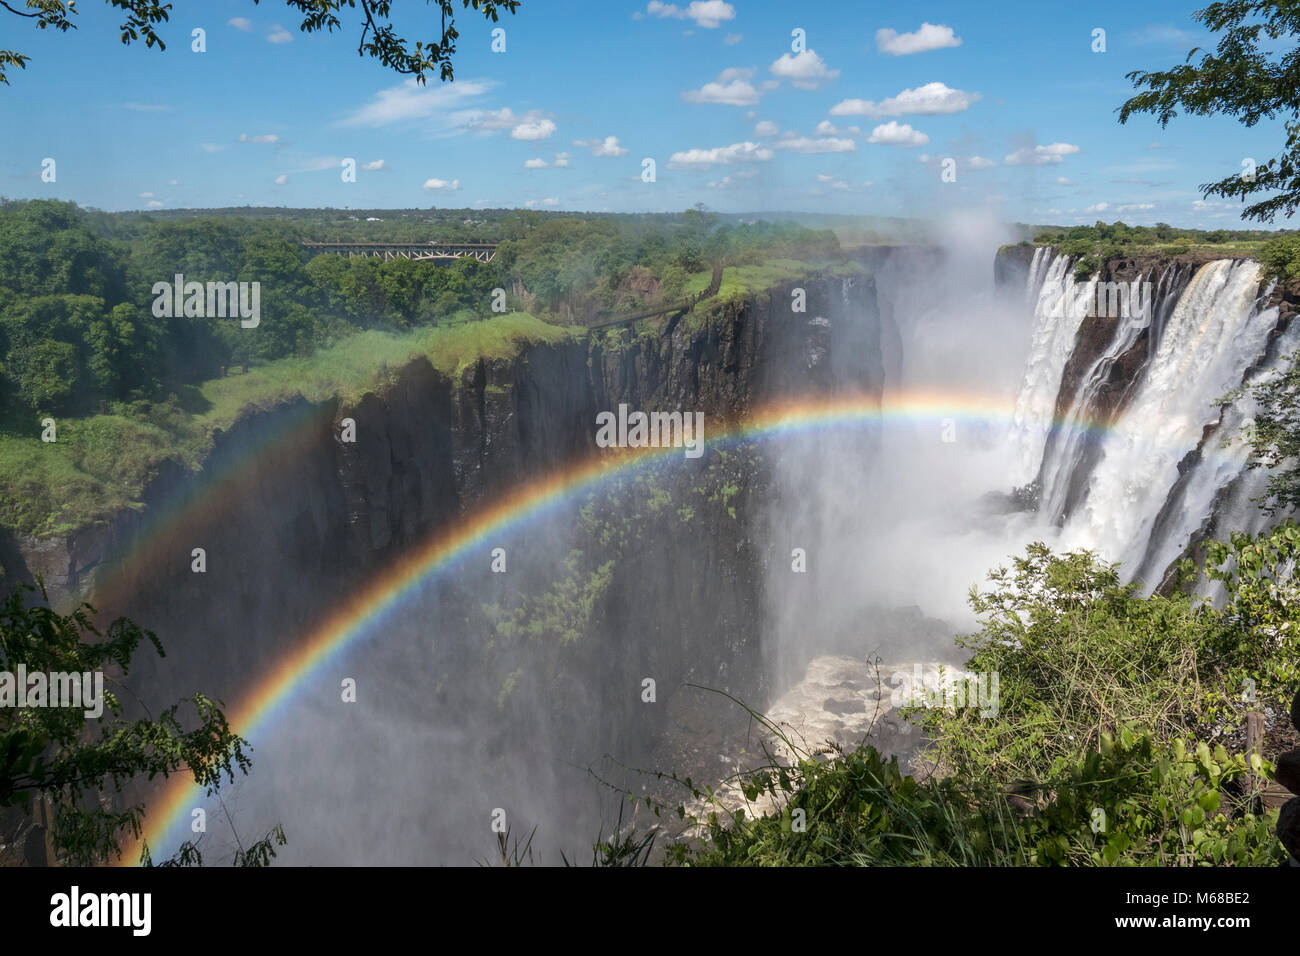 Victoria Falls - Wide angle view Stock Photo